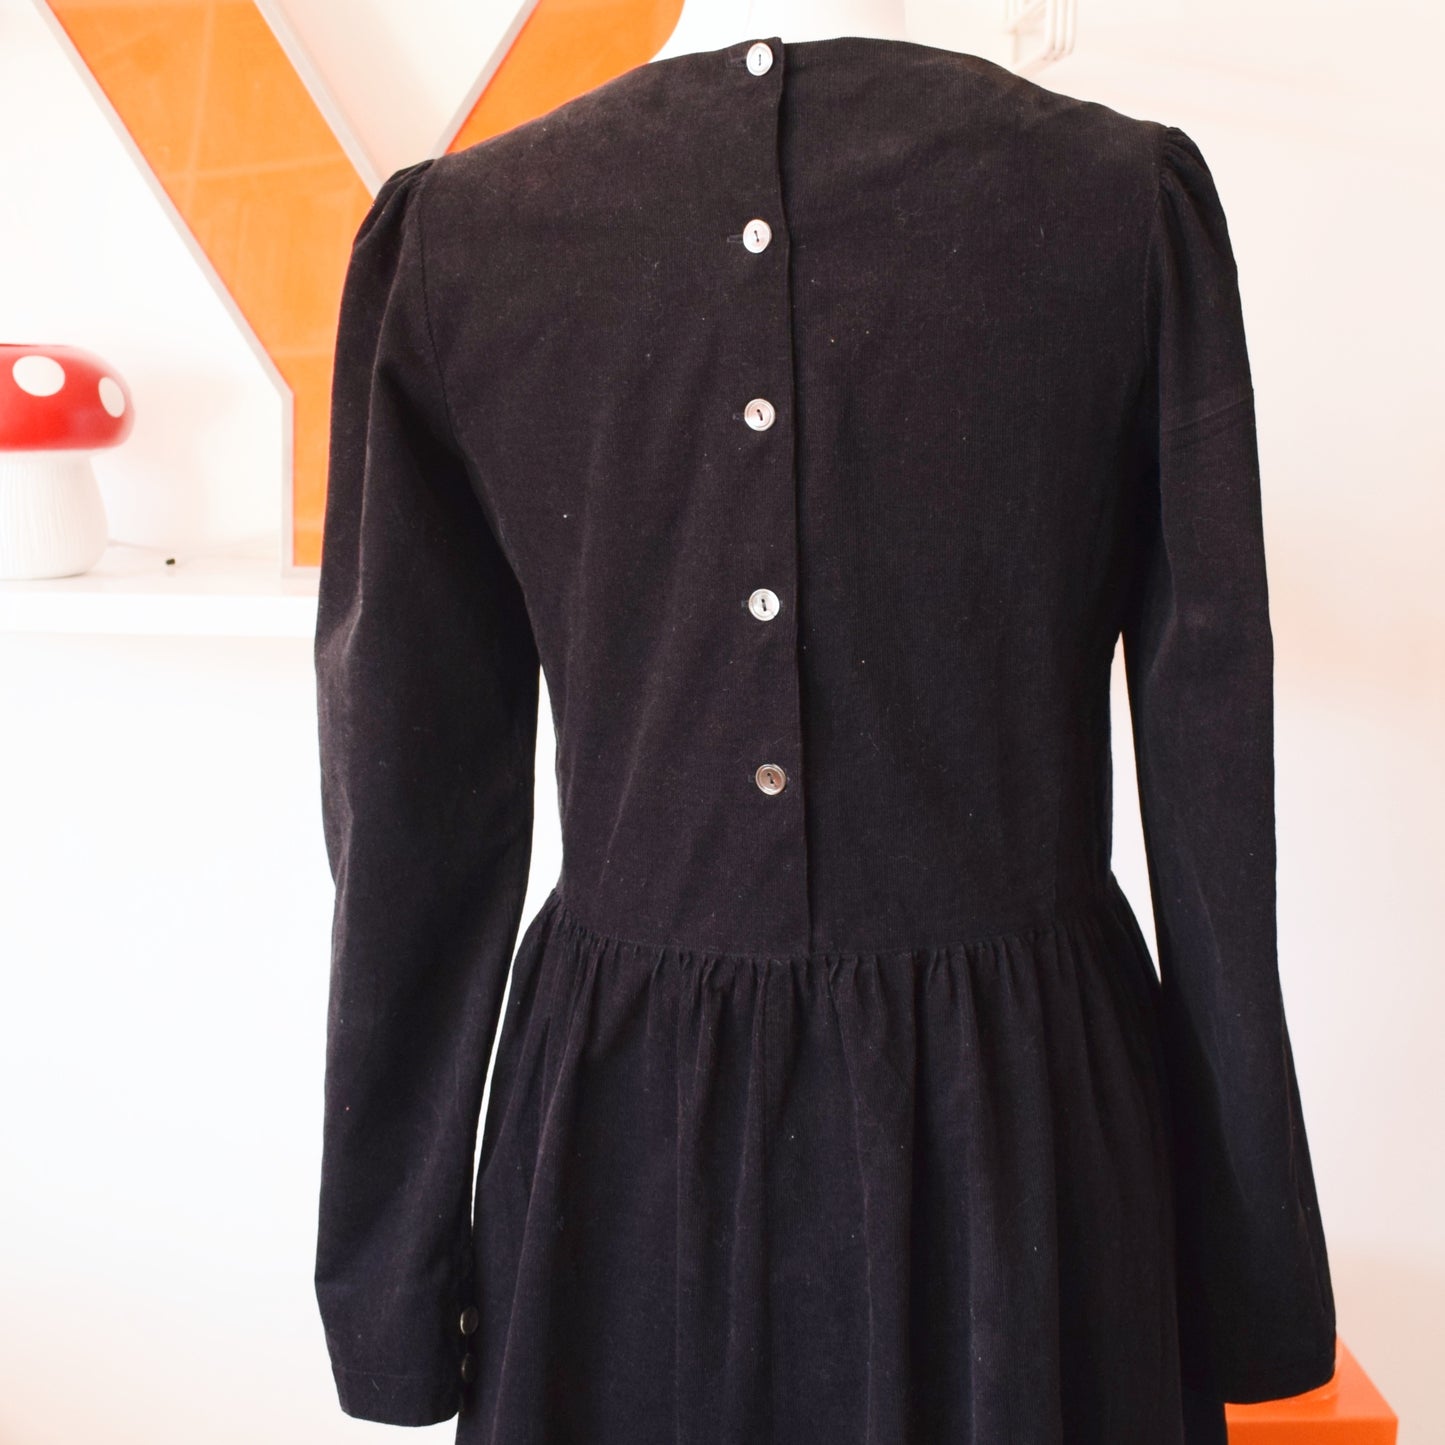 Vintage 1980s Laura Ashley Dress - Black Corduroy - Size 12